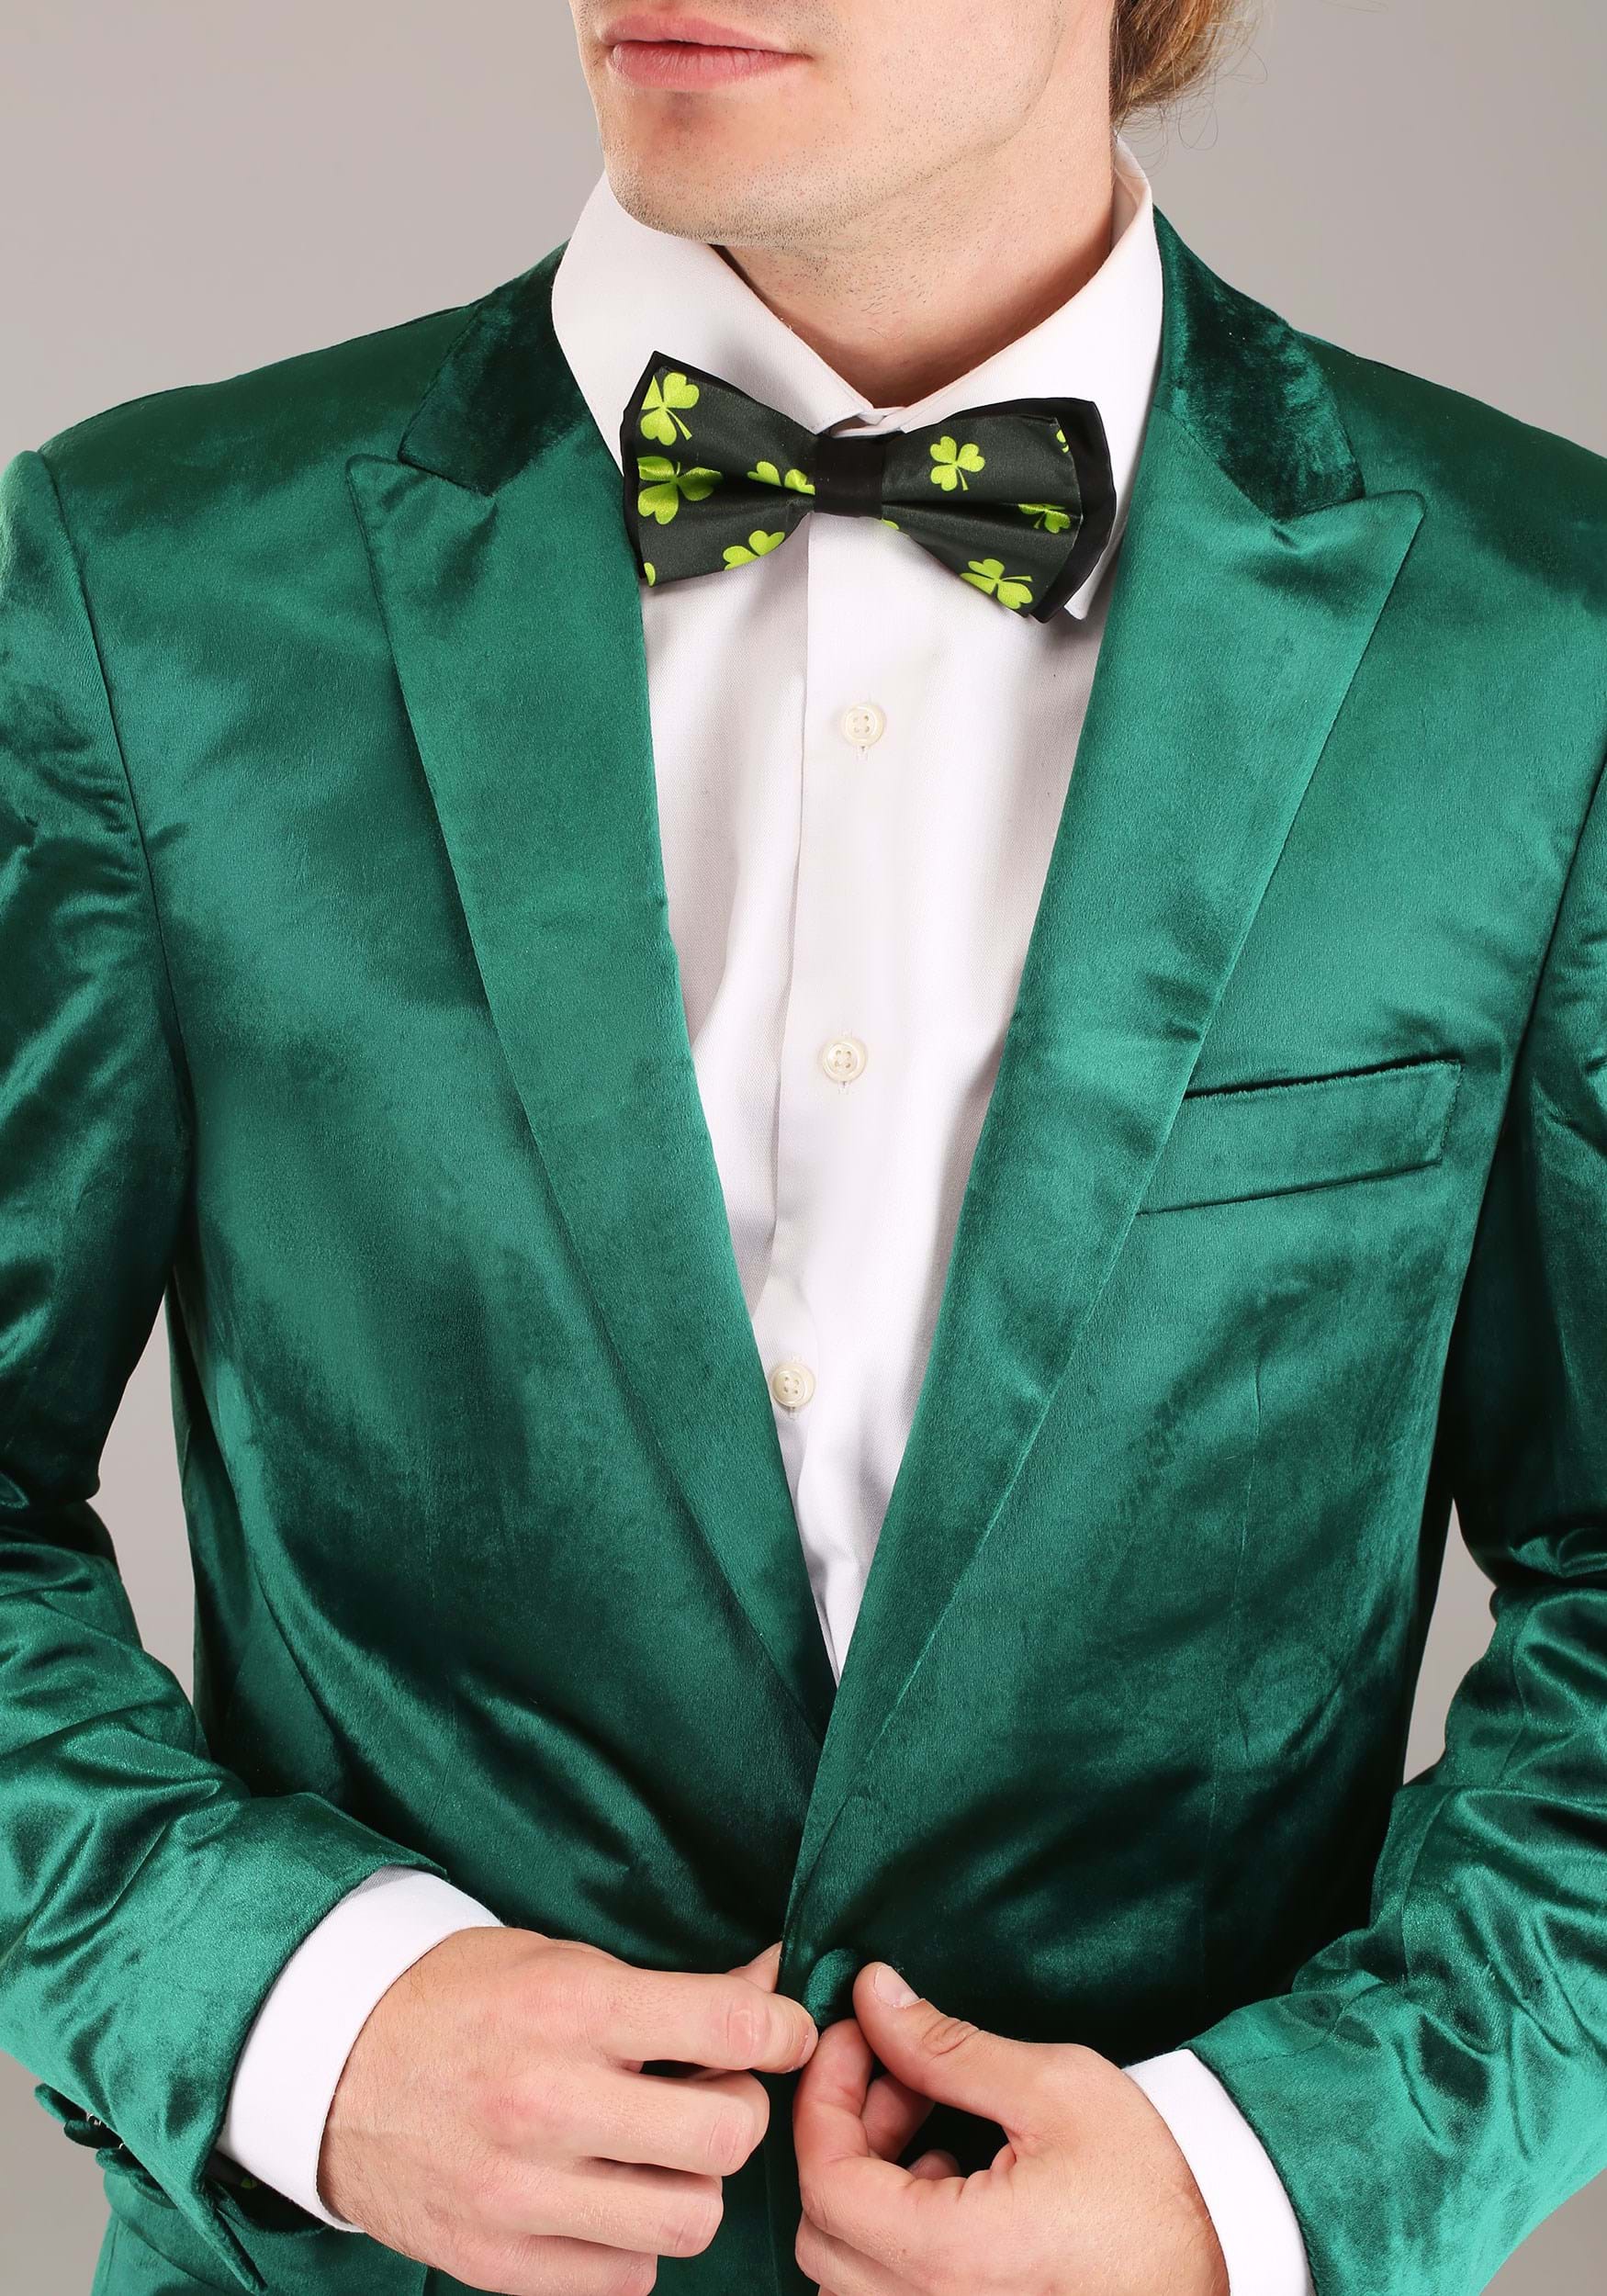 Men's Green St. Patrick's Day Leprechaun Suit Costume